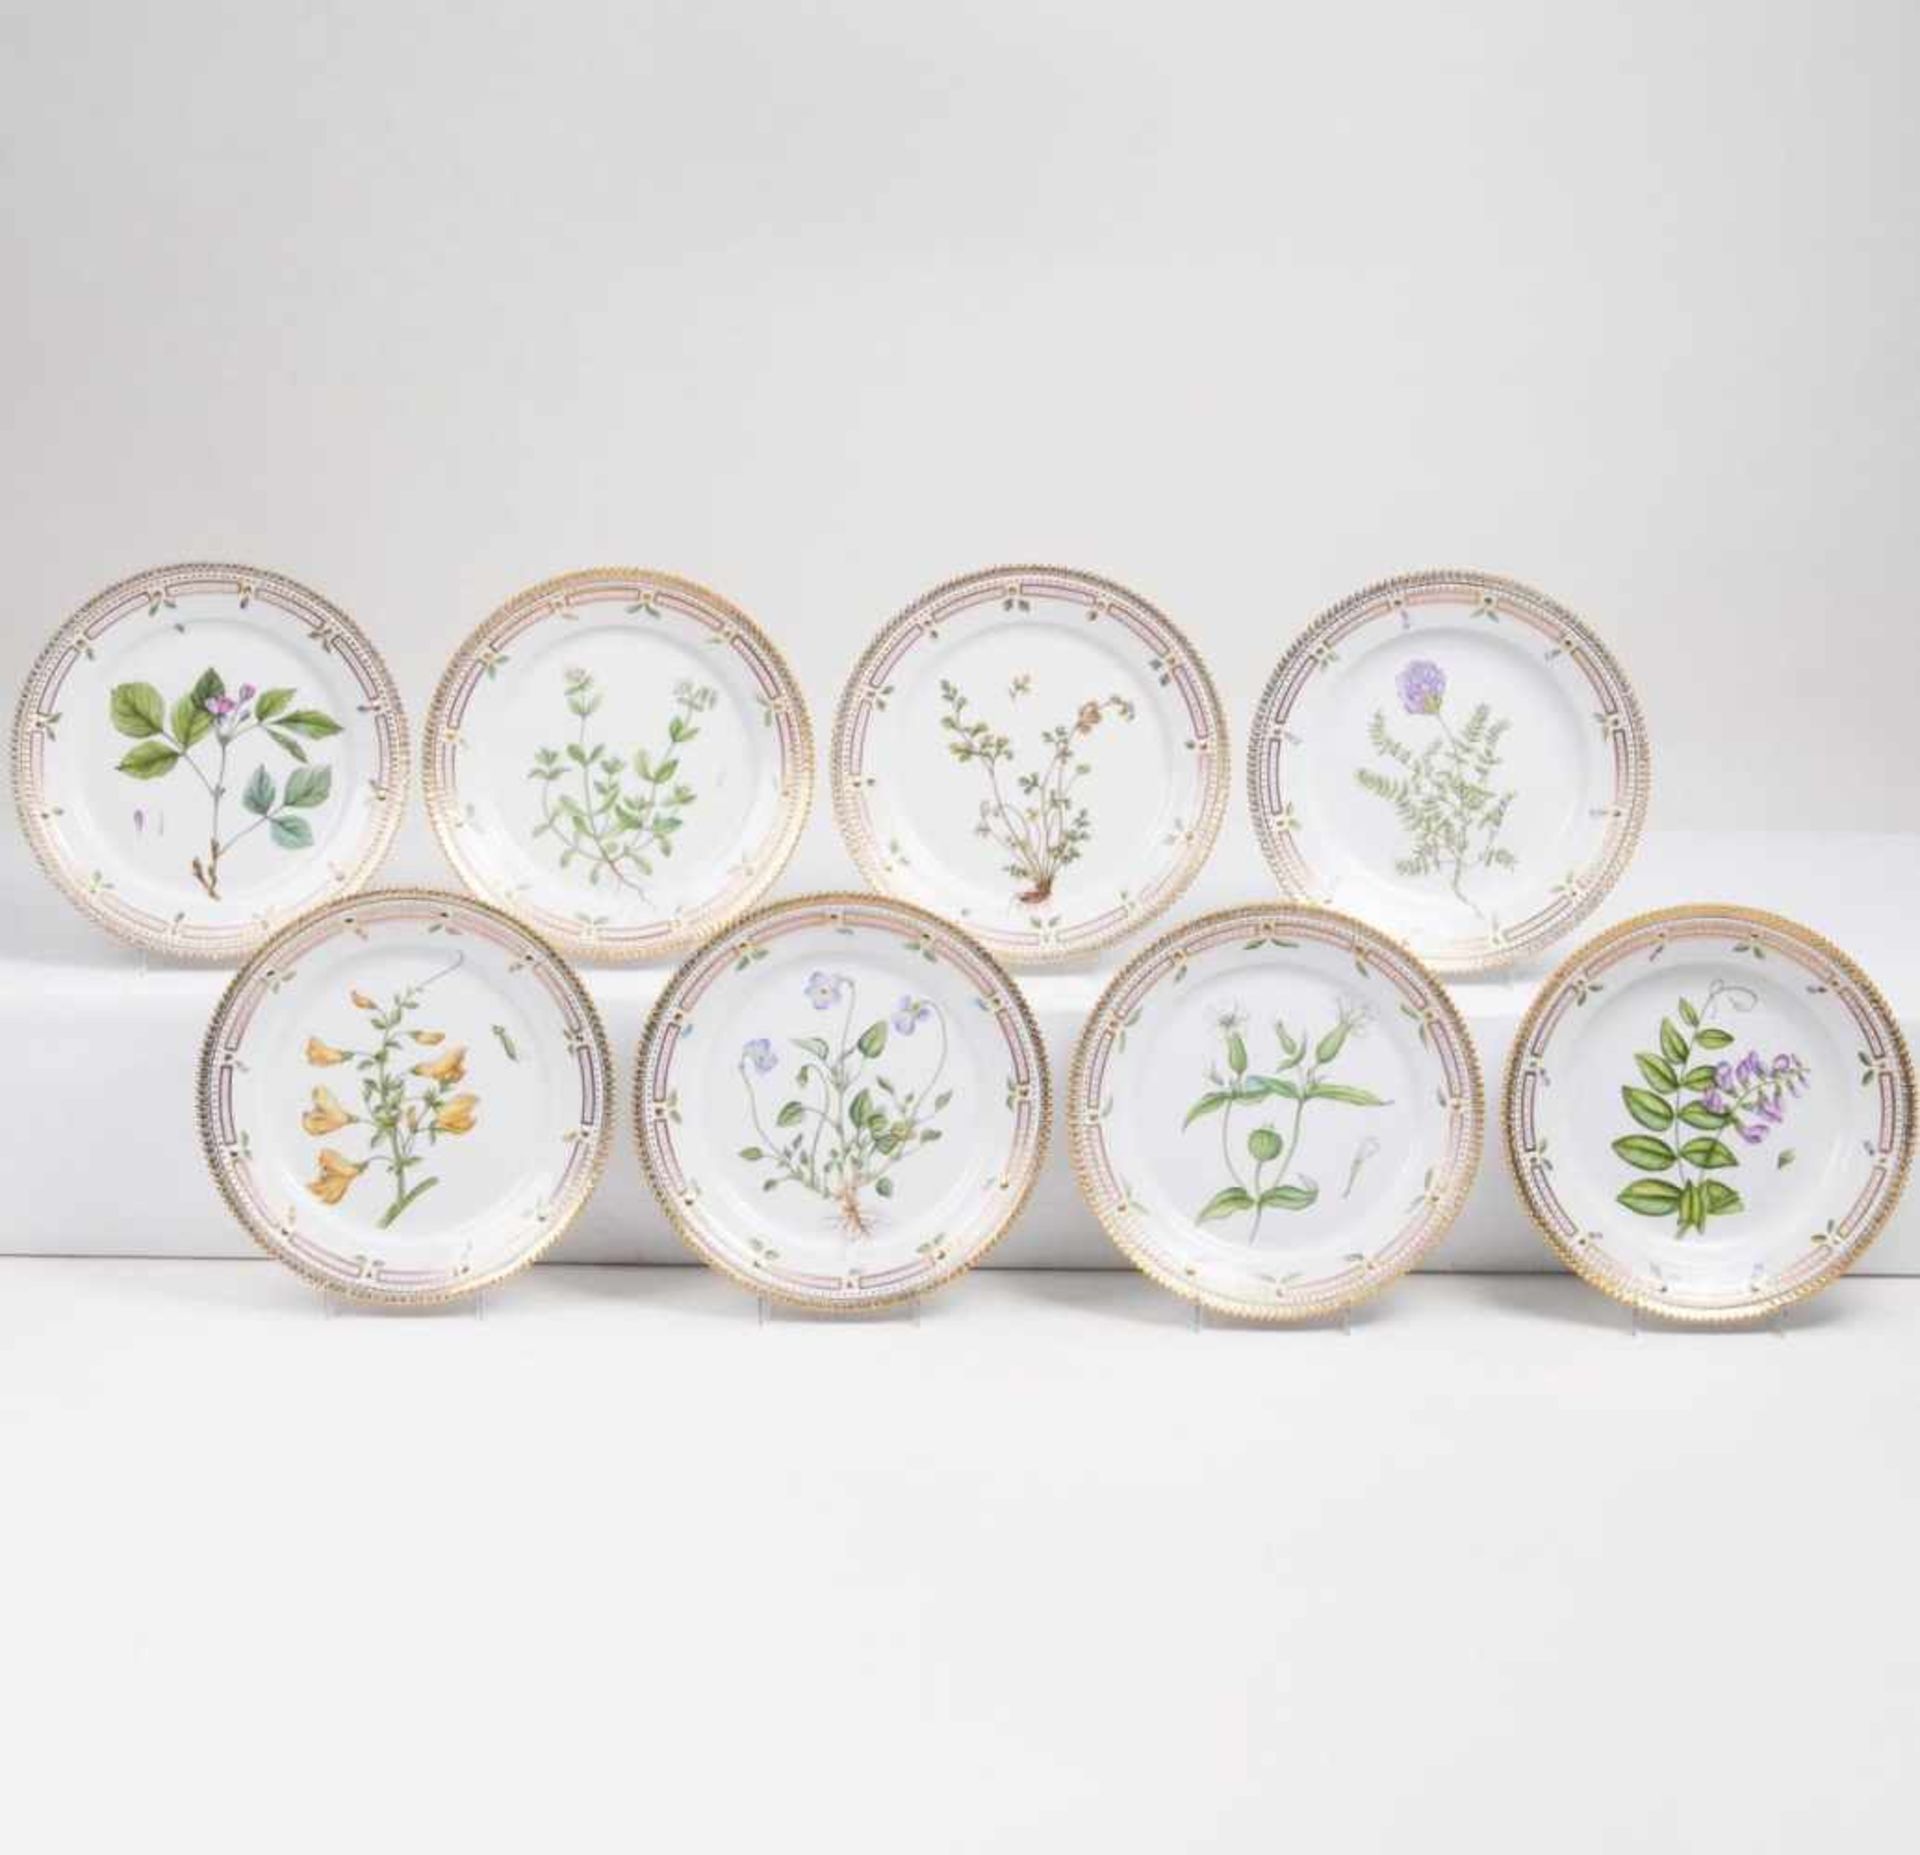 A Set ot 8 Flora Danica Breakfast Plates with Botanical SpecimenRoyal Copenhagen, around 1970 and